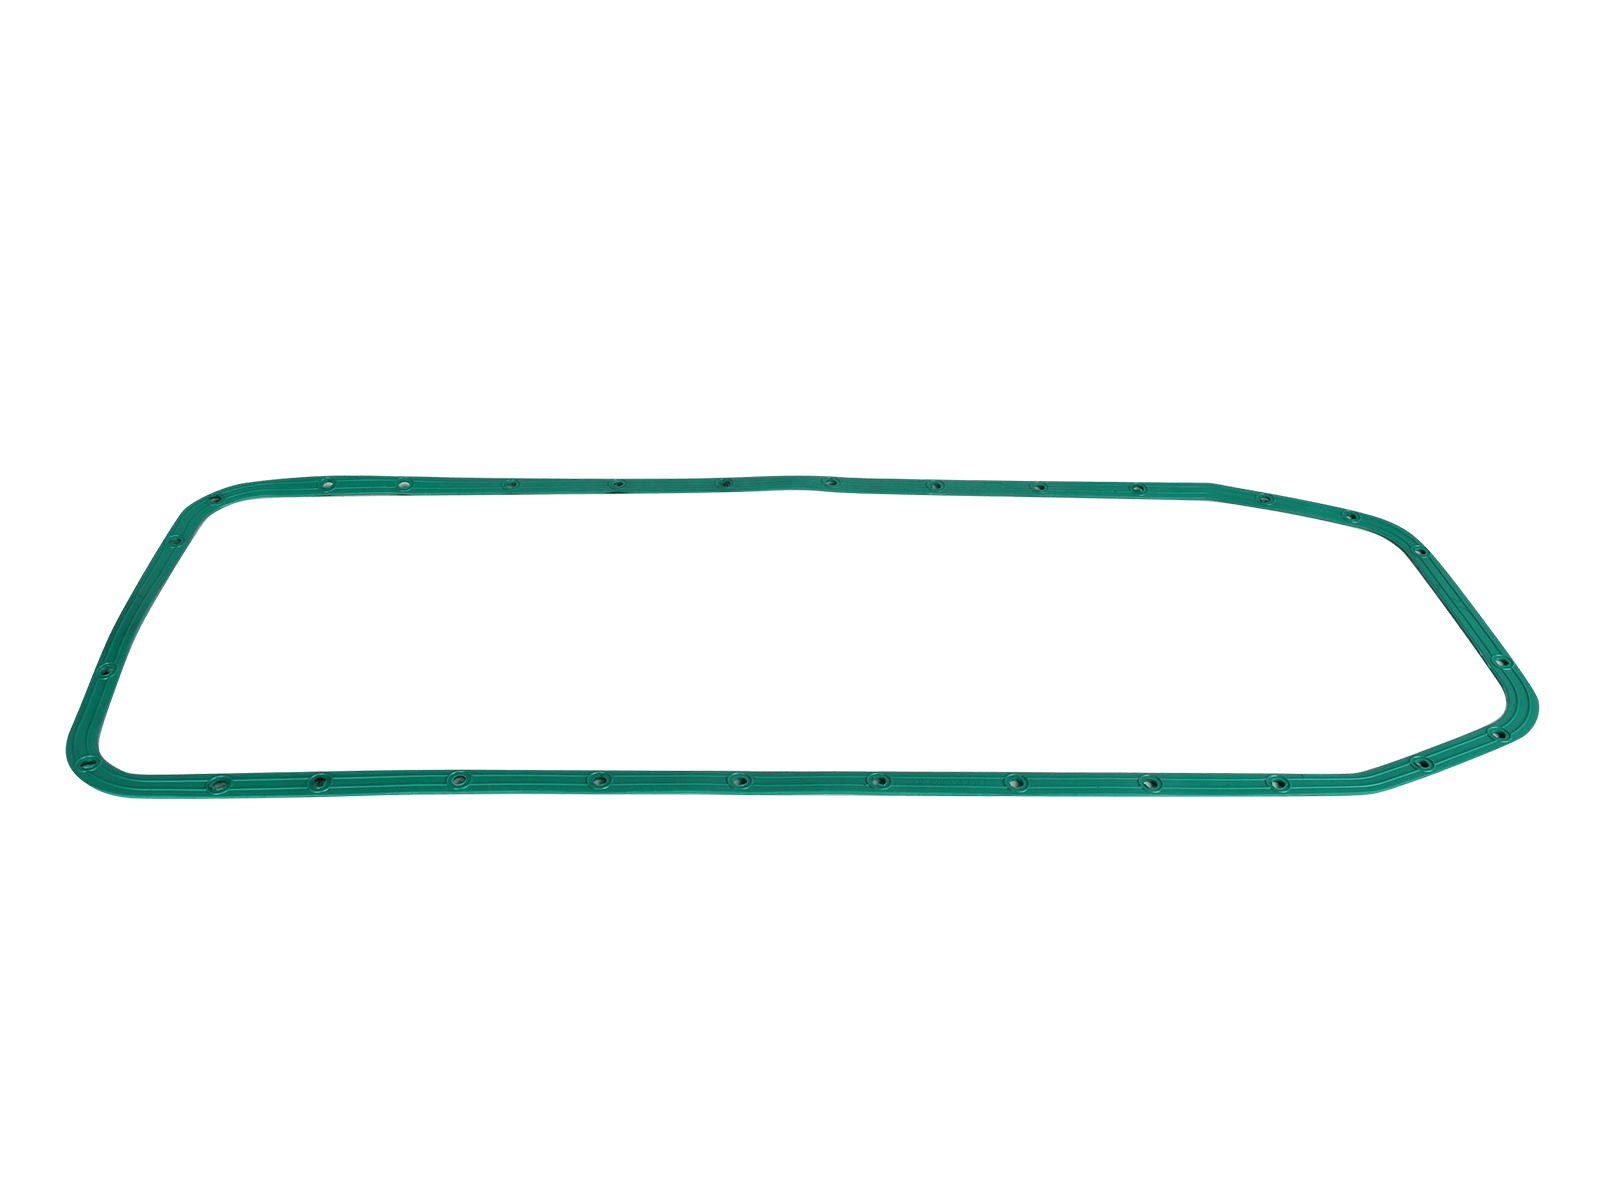 Прокладка КАМАЗ картера масляного МБС зеленая с металлическими вставками АВТОРЕСУРС фотография №2